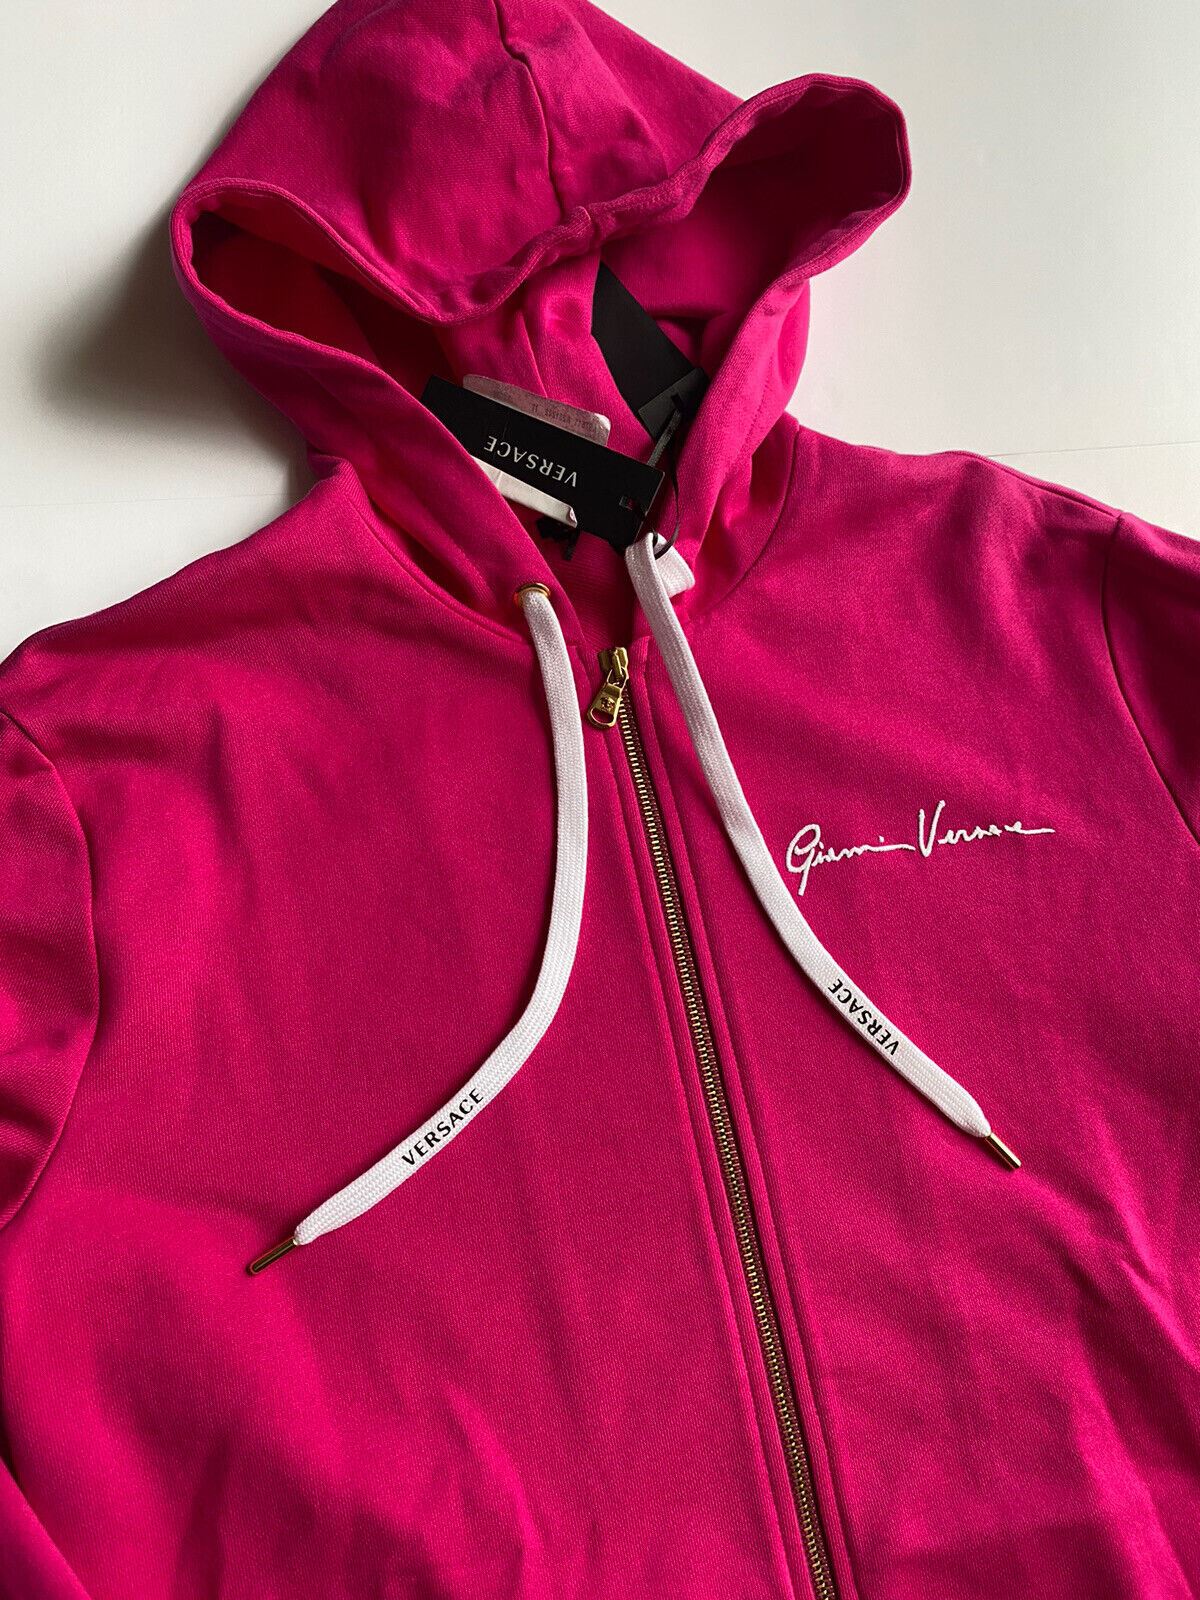 NWT 950 $ Versace Medusa Hooded Pink Jacket für Damen 10 US (44 Euro) A231242 IT 